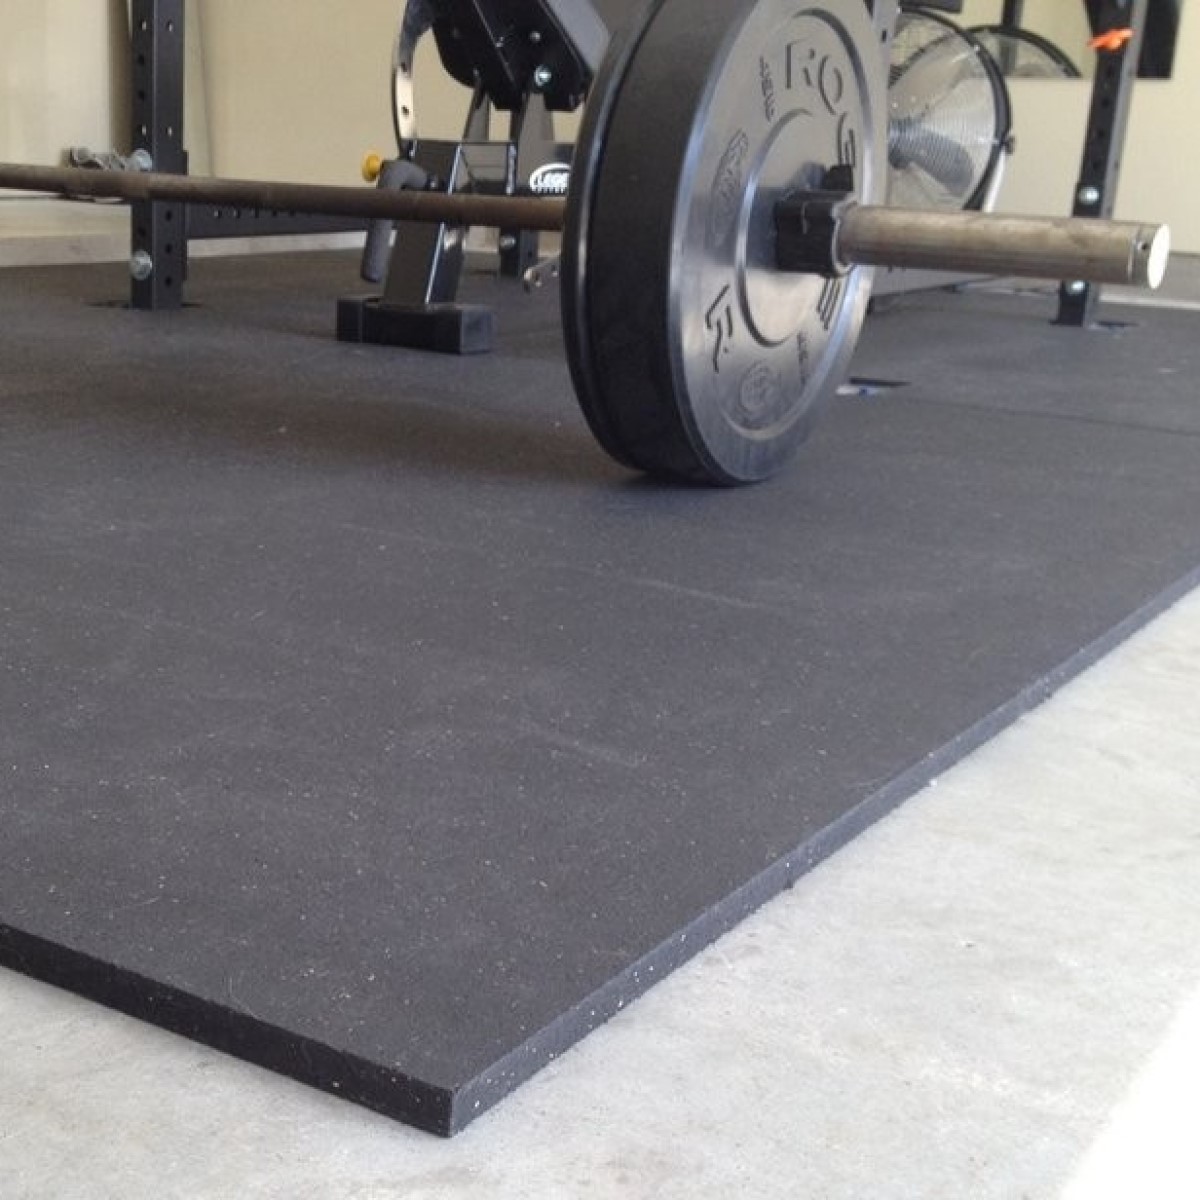 Gym Flooring Guide Rubber Mats And, Rubber Rolls Garage Gym Flooring